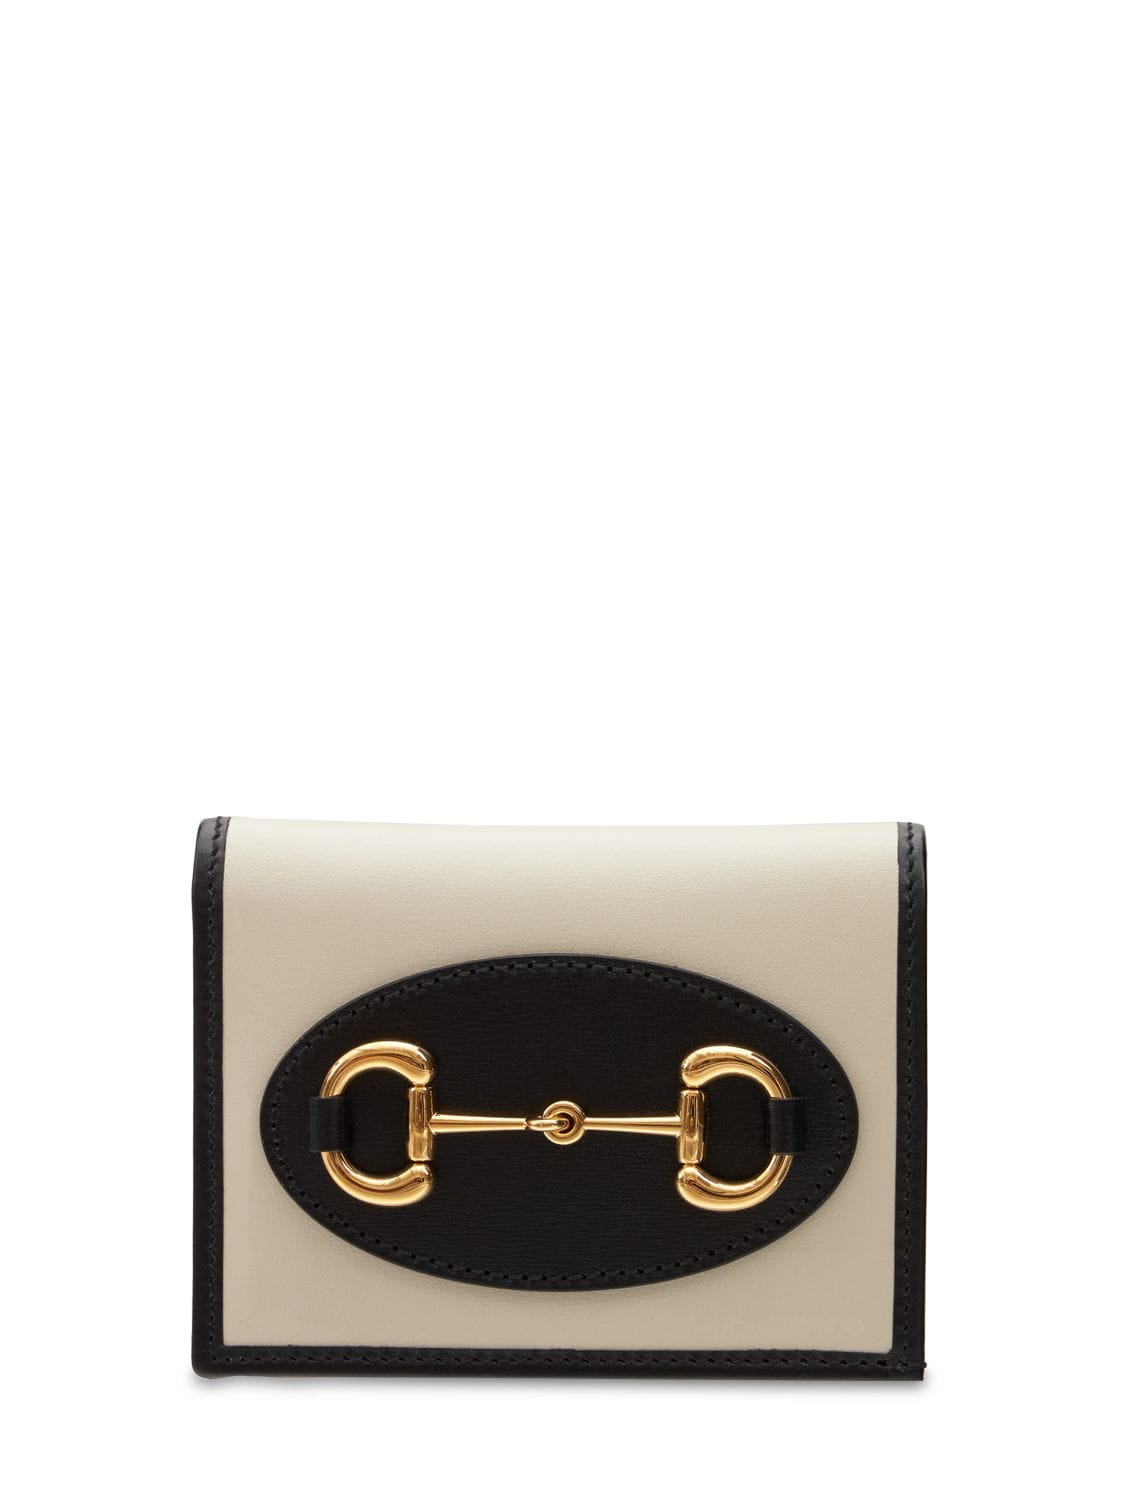 Gucci Horsebit 1955 card case wallet in black leather